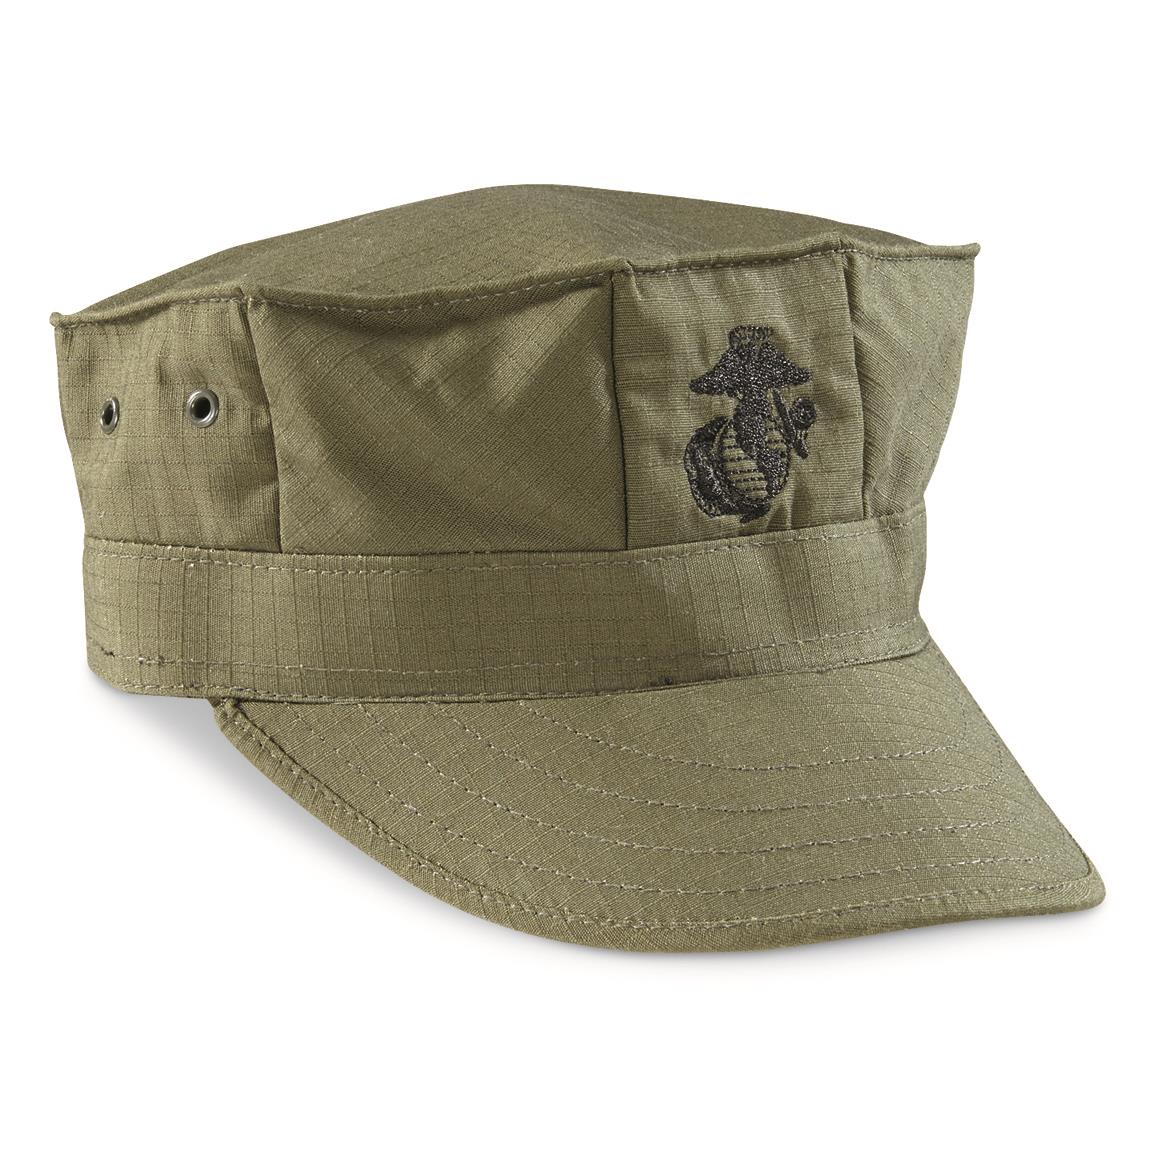 Marine Corps Uniform Hats